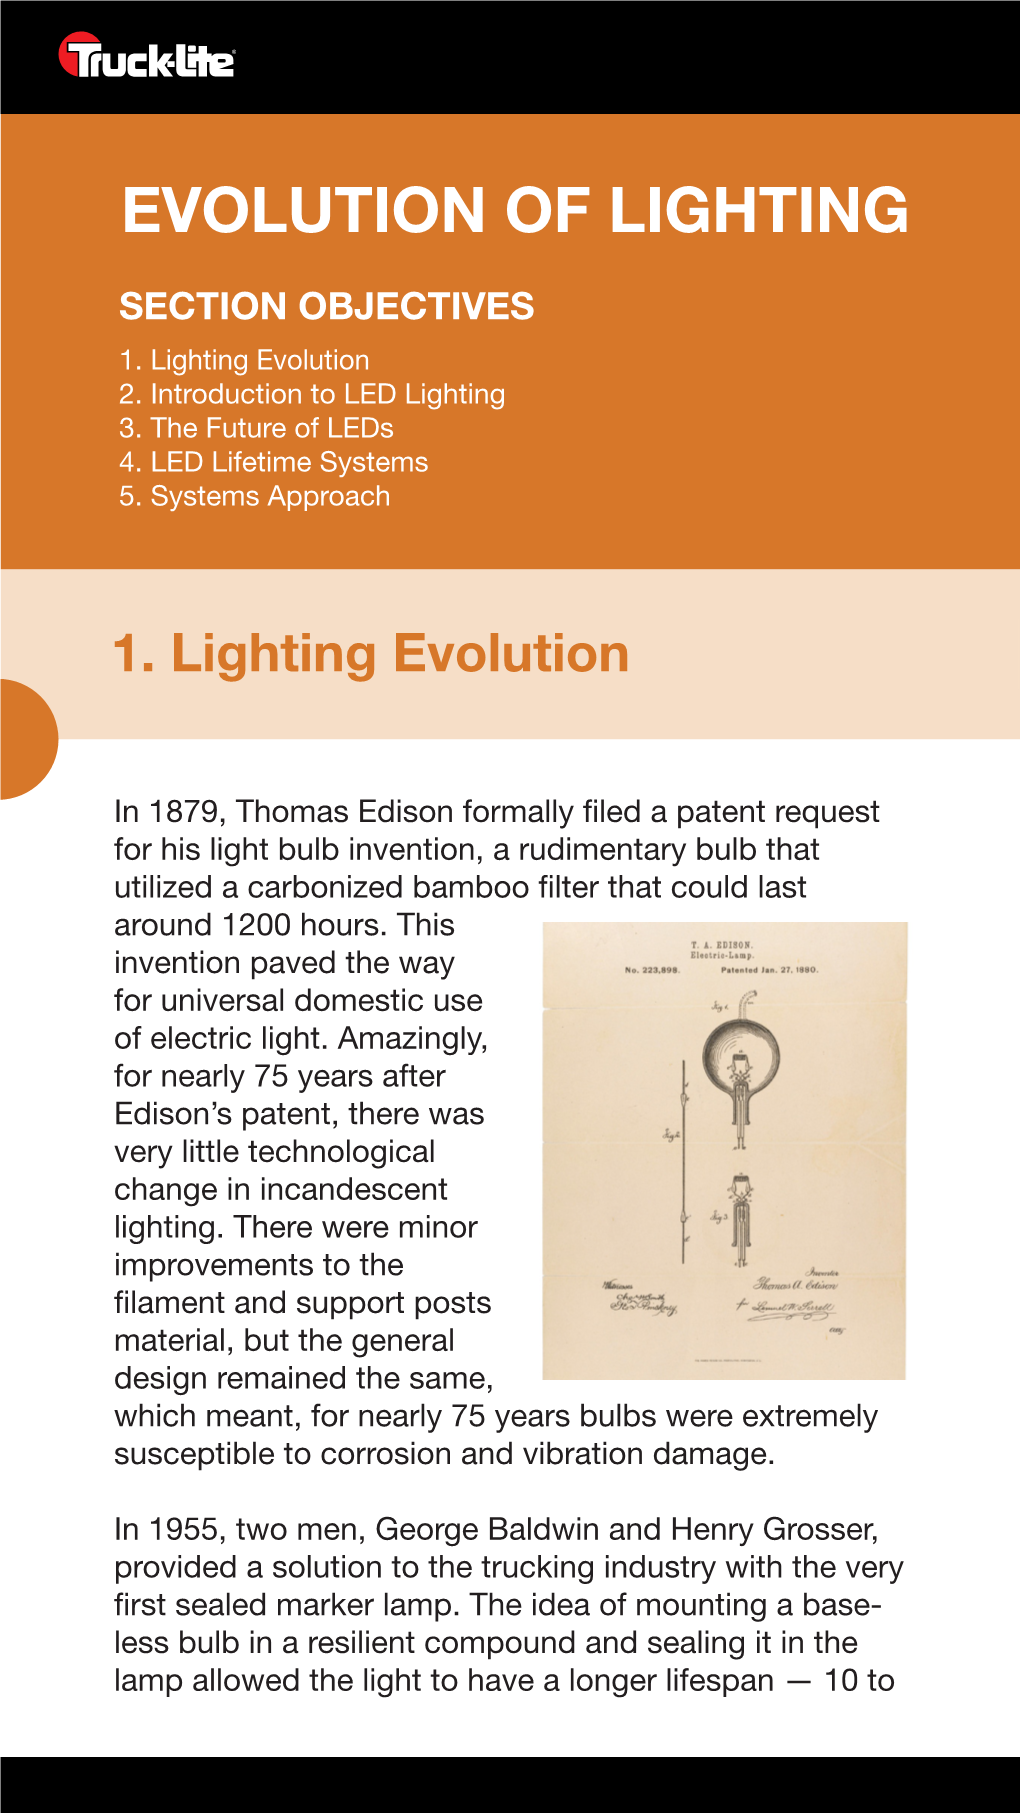 Evolution of Lighting